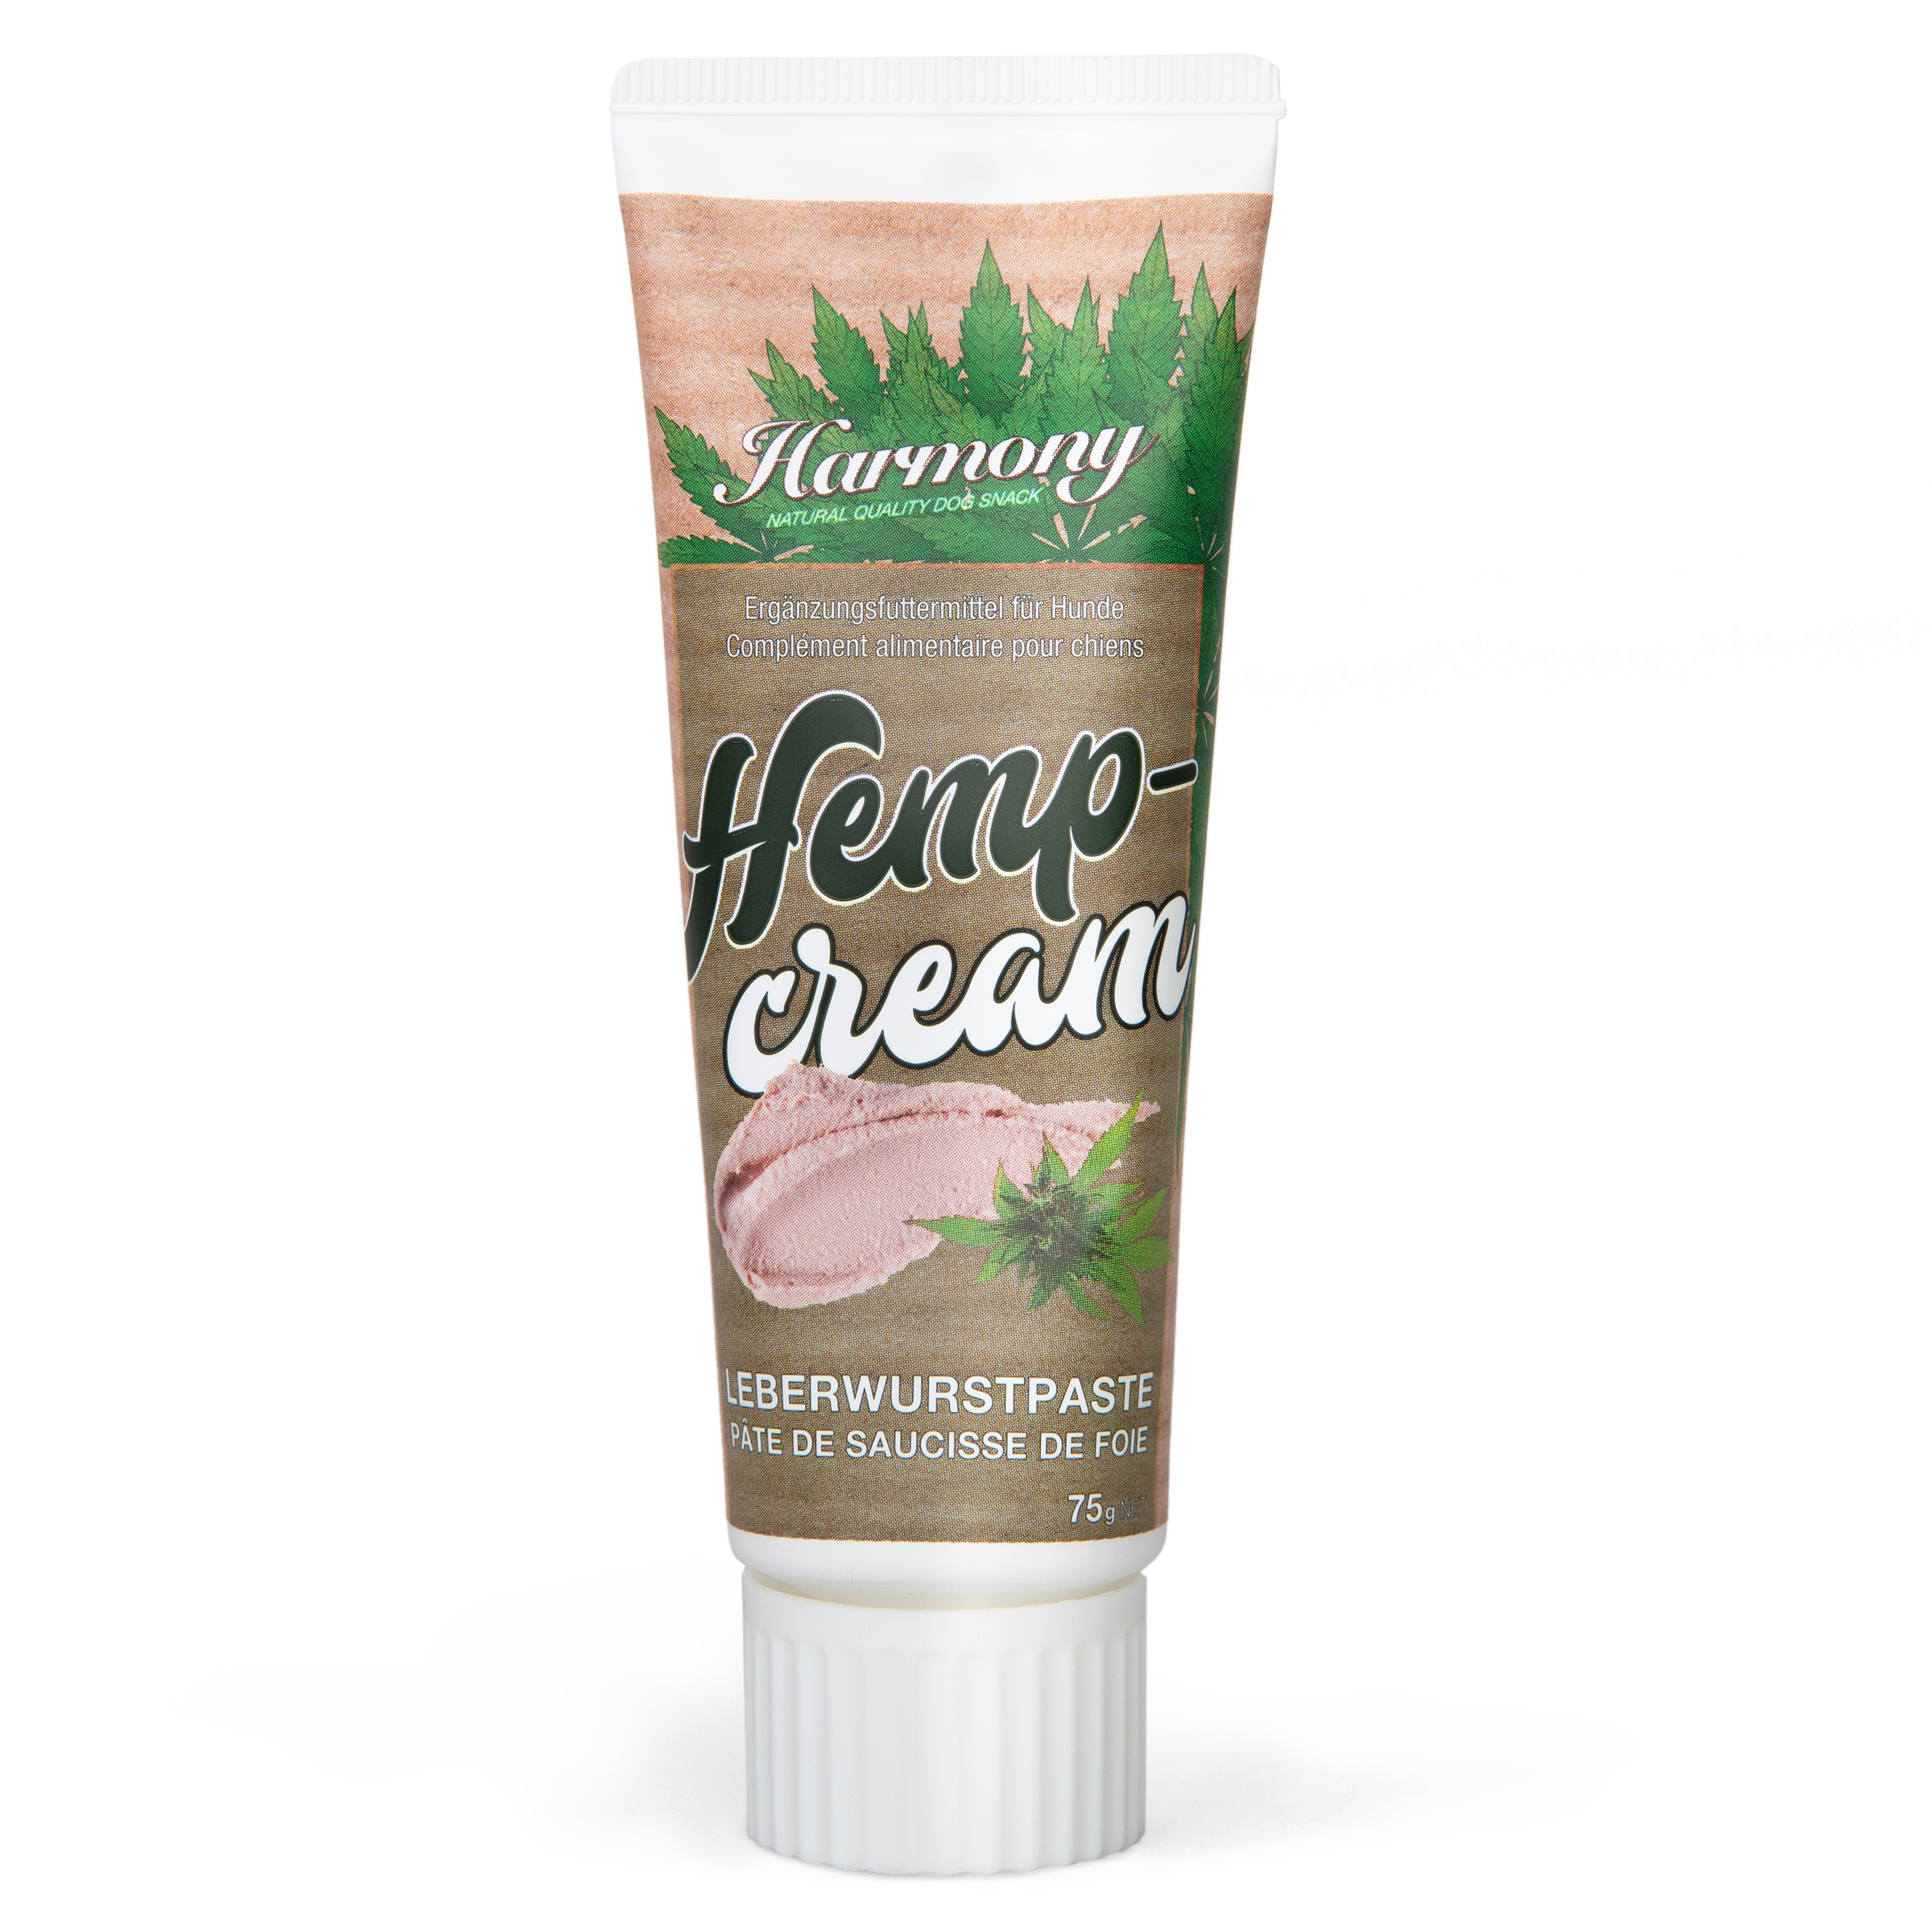 Harmony Pet Natural Hemp-Cream 75g